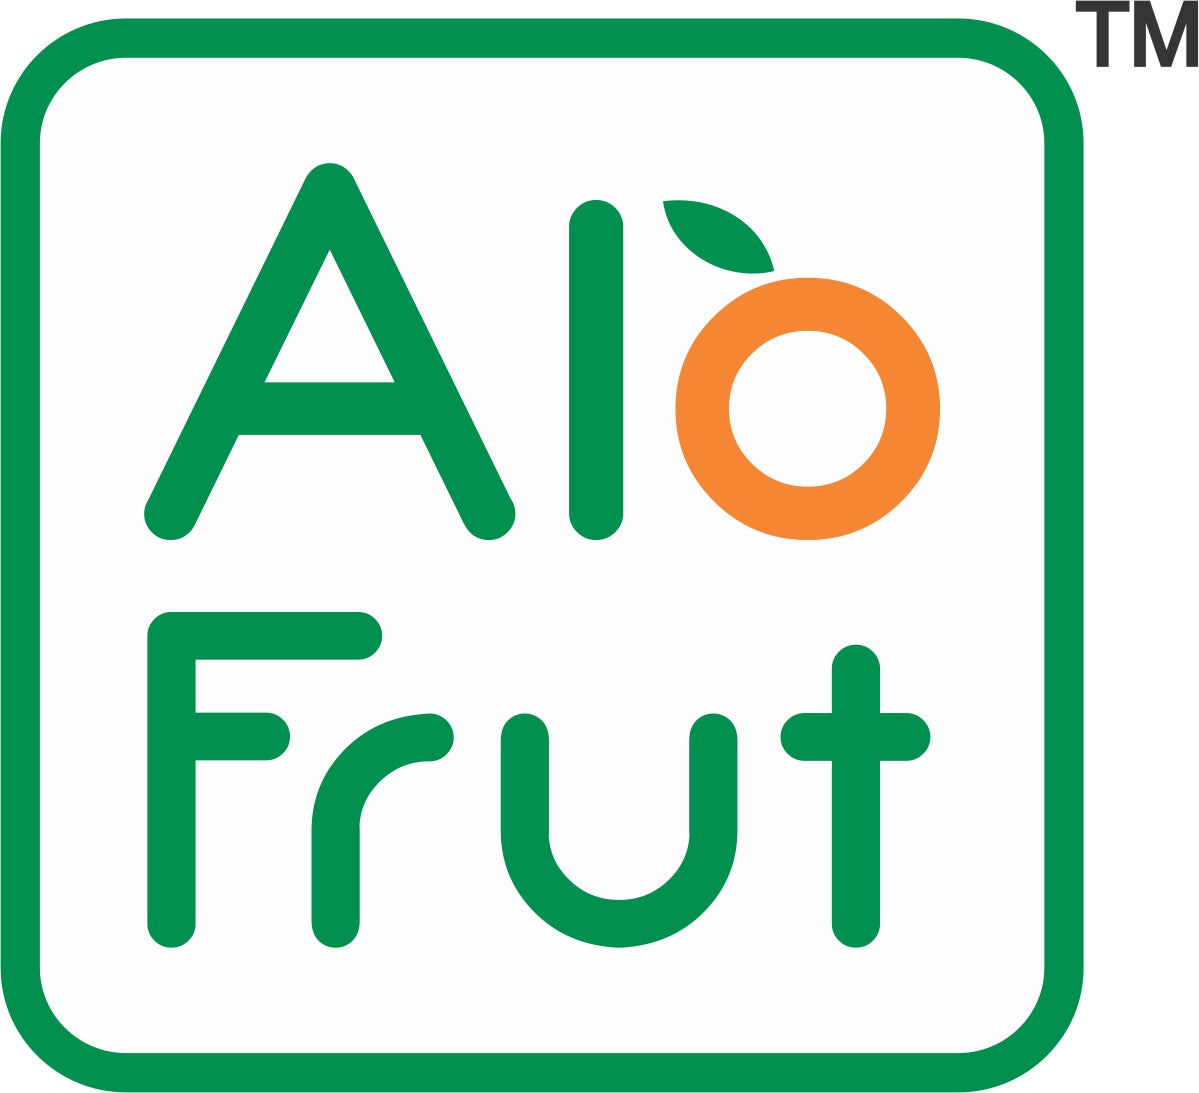 Alo Frut Apple Aloevera Chunks & Juice 200ml (Pack of 48)